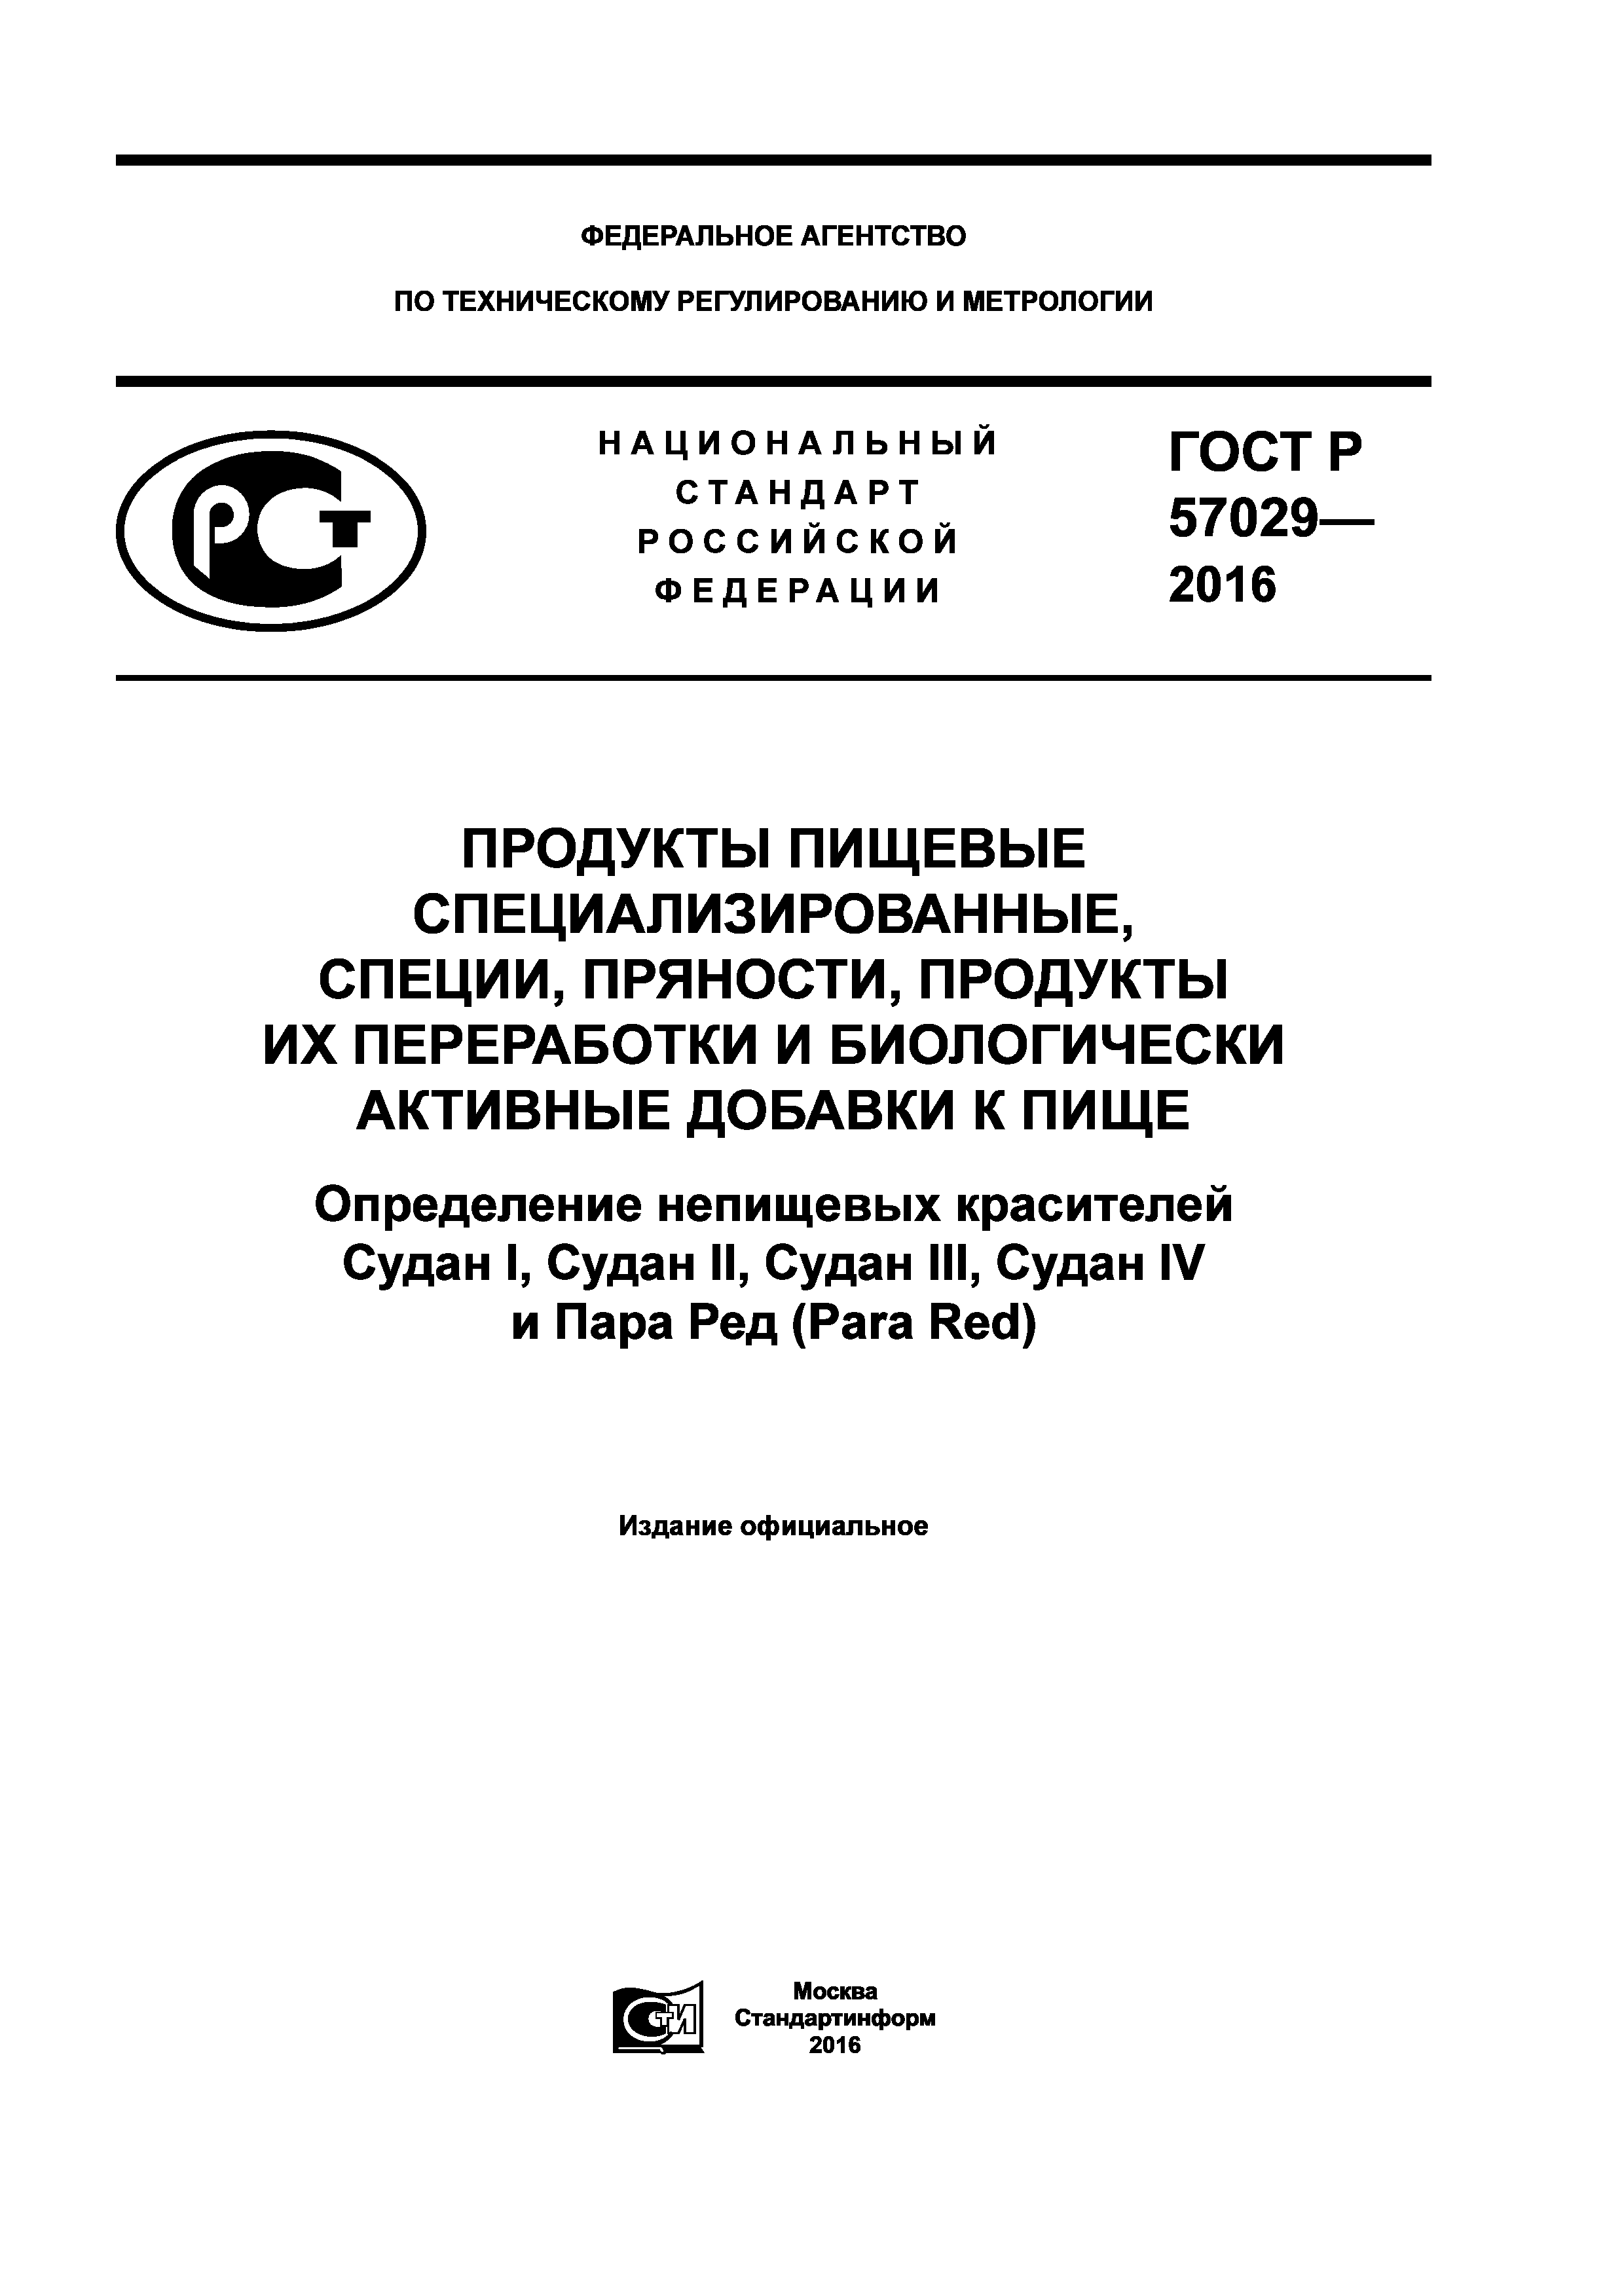 ГОСТ Р 57029-2016